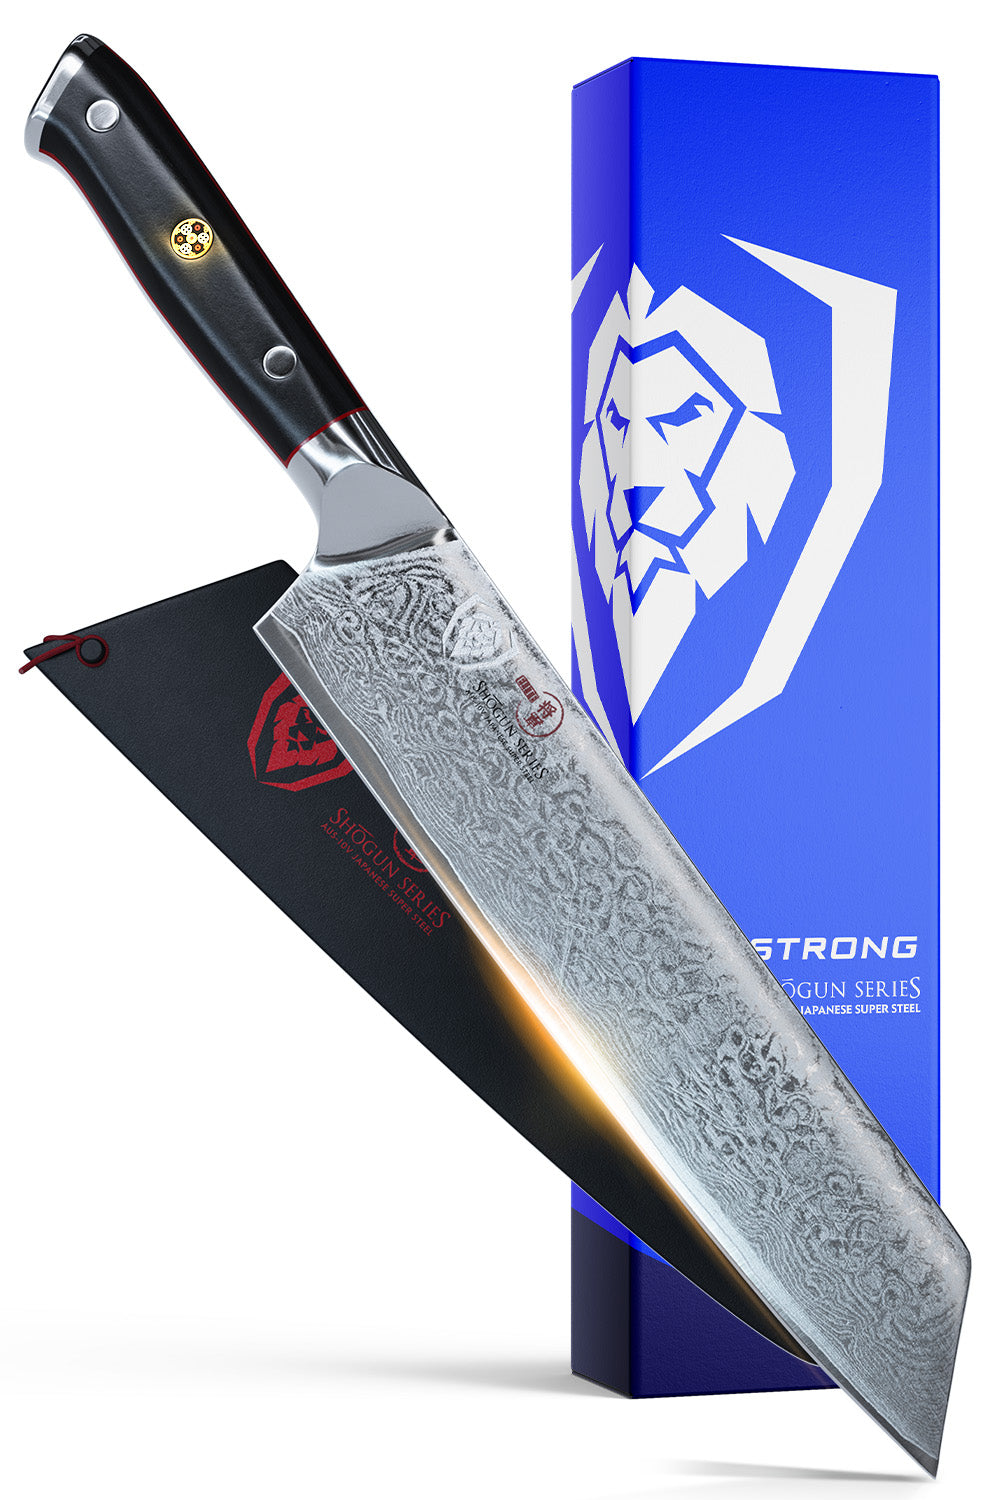 Kiritsuke Chef's Knife 8.5" | Shogun Series ELITE | Dalstrong ©